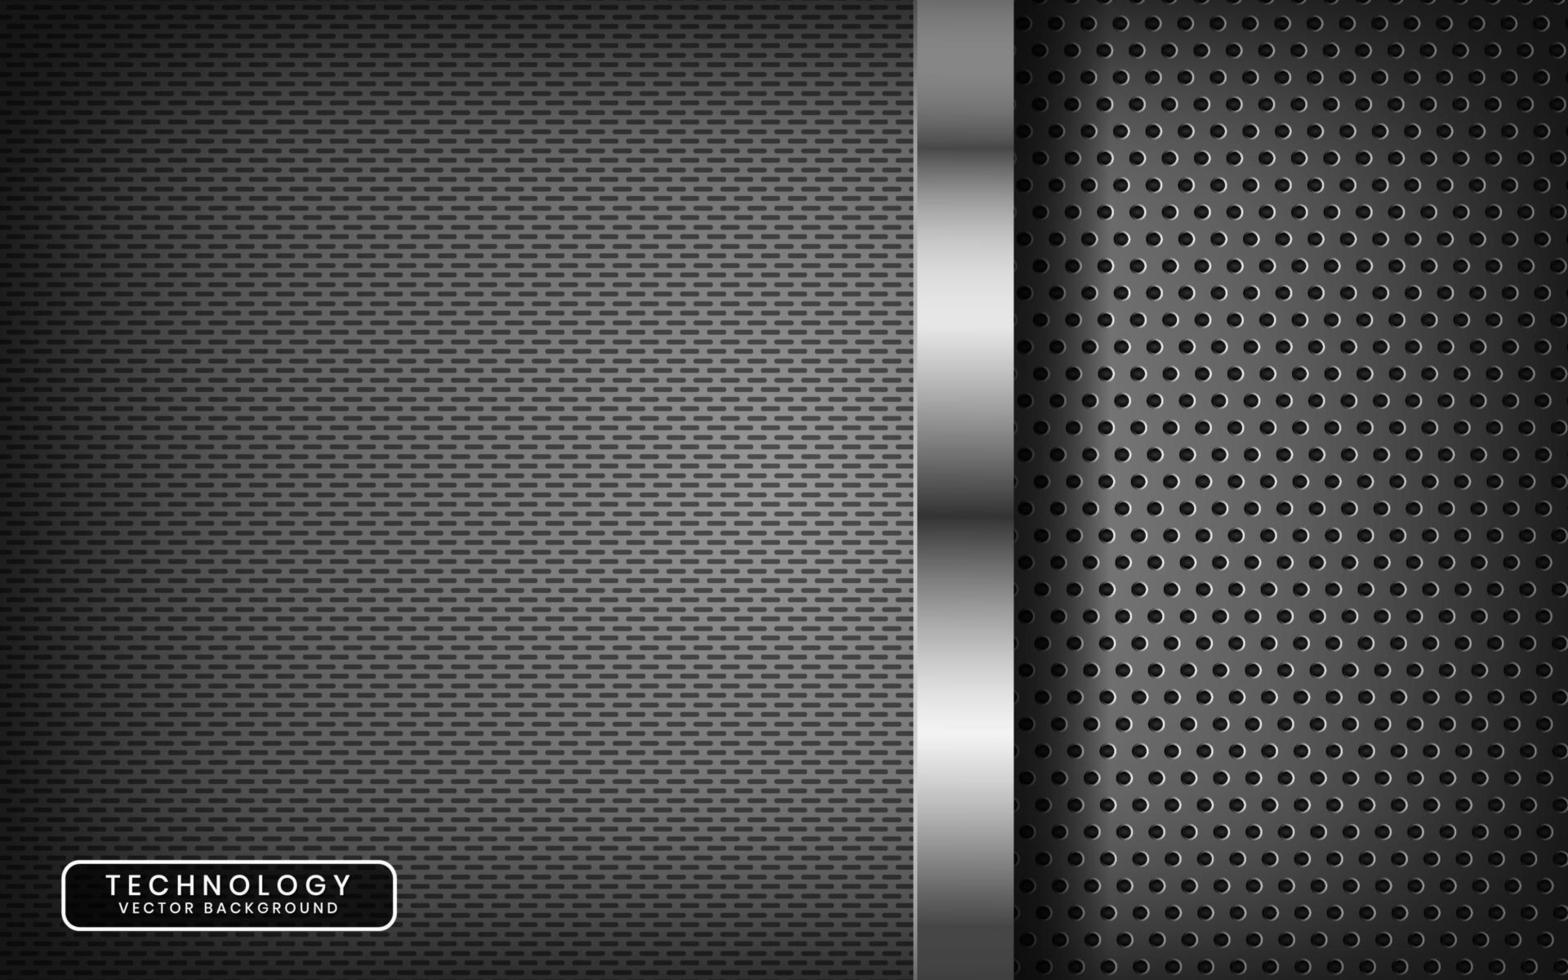 Capa de superposición de fondo abstracto tecno gris 3d en el espacio oscuro con decoración de líneas plateadas. elemento de diseño gráfico moderno concepto de estilo metálico para banner, volante, tarjeta o portada de folleto vector